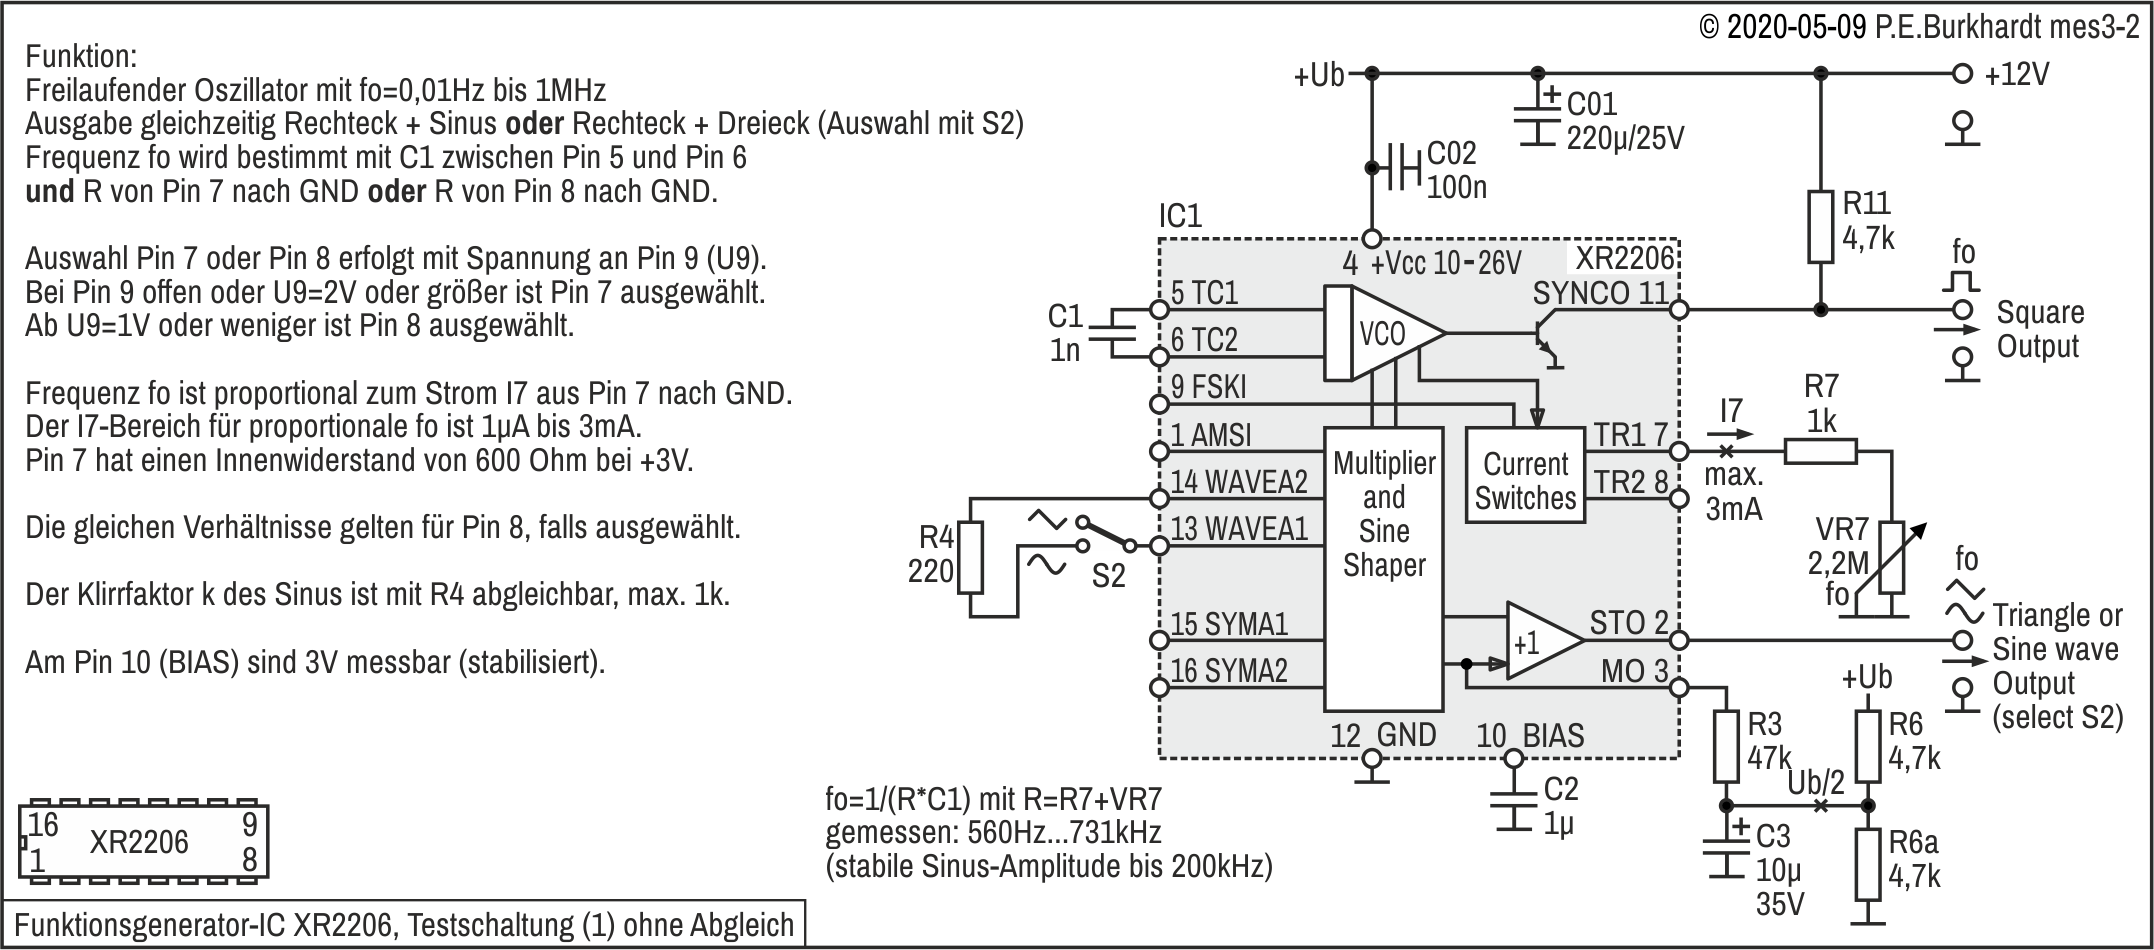 Funktionsgenerator XR2206, Testschaltung (1)